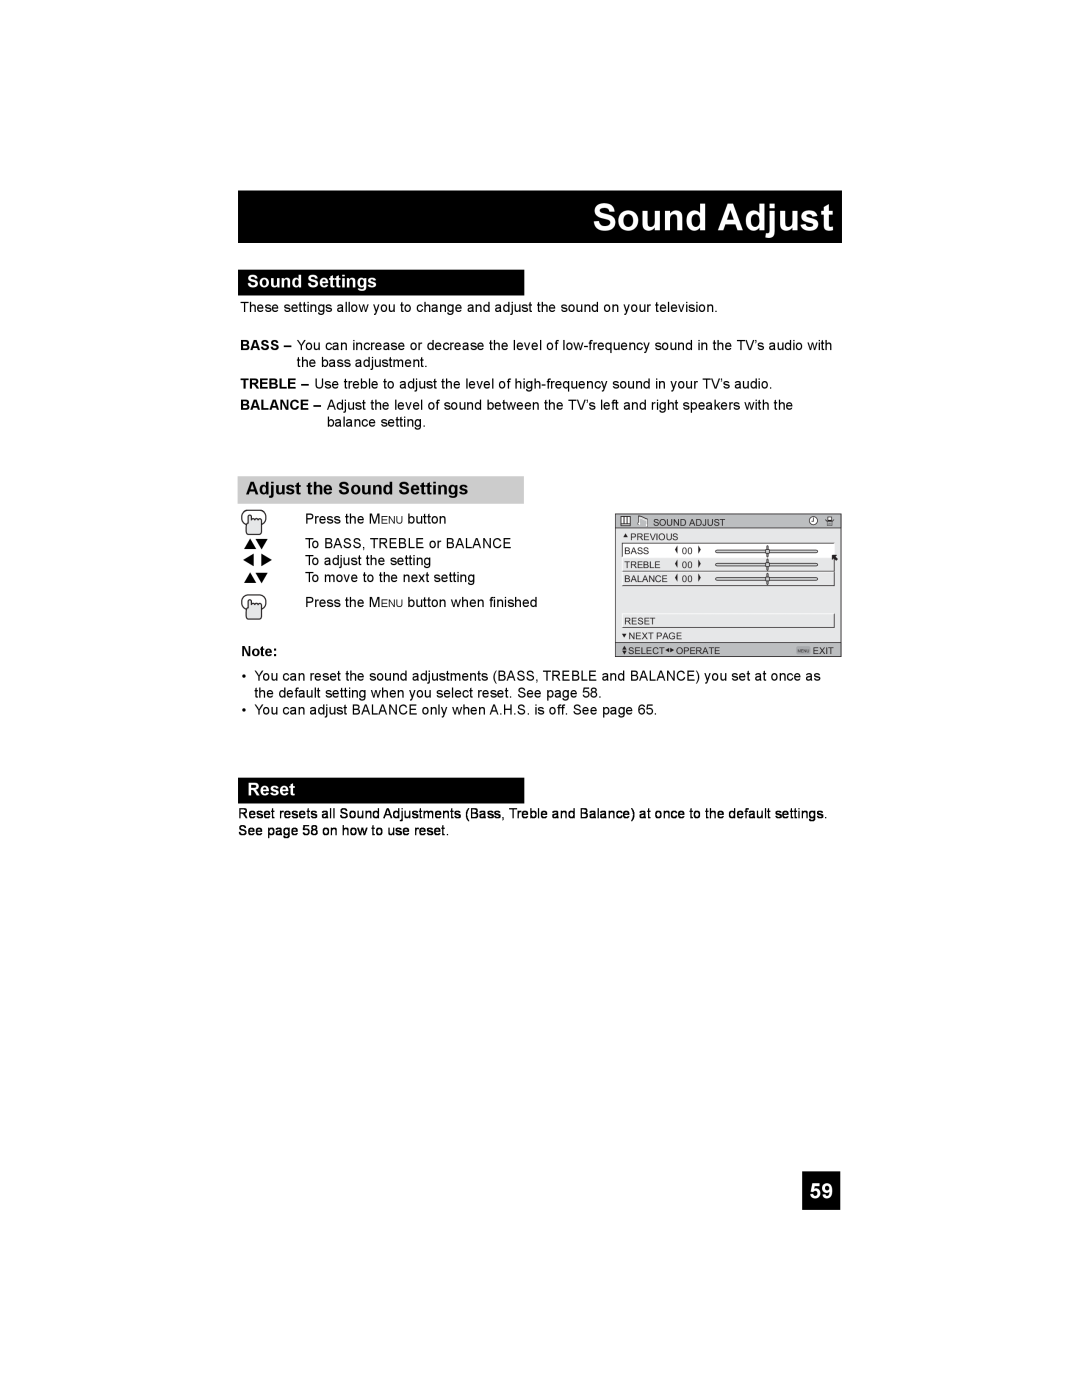 JVC PD-42X776 manual Sound Adjust, Adjust the Sound Settings, Reset 